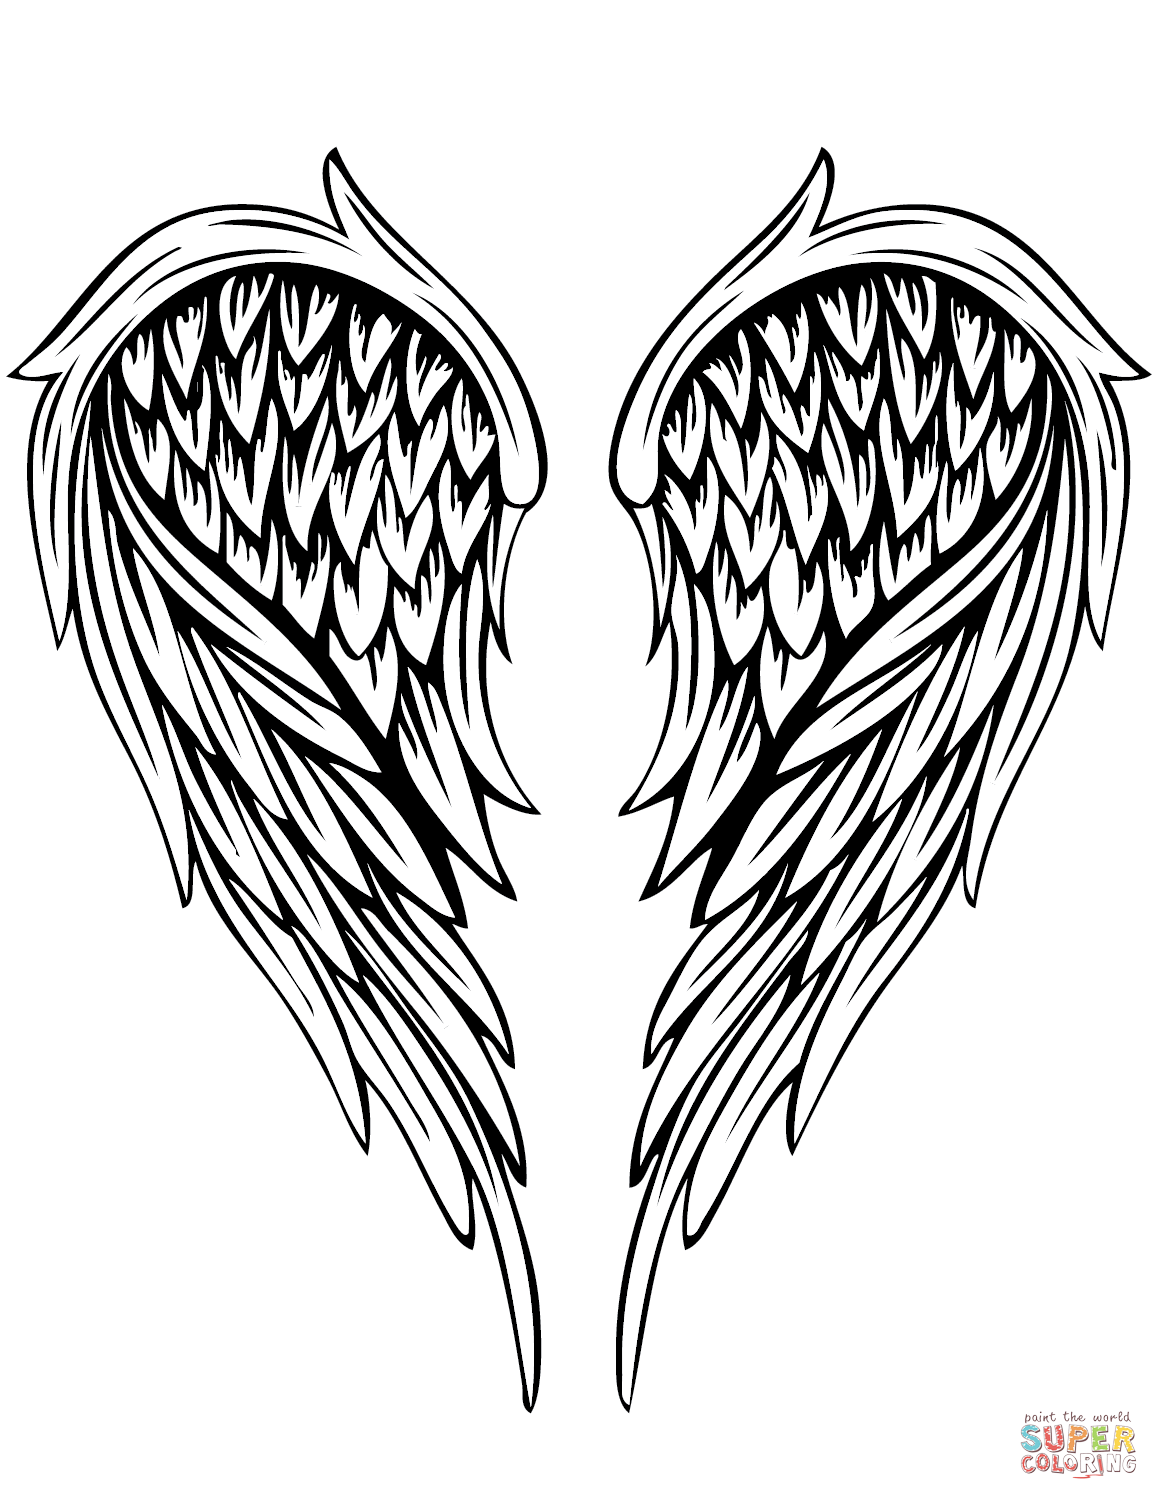 Dibujo de tatuaje de alas de ãngel para colorear dibujos para colorear imprimir gratis